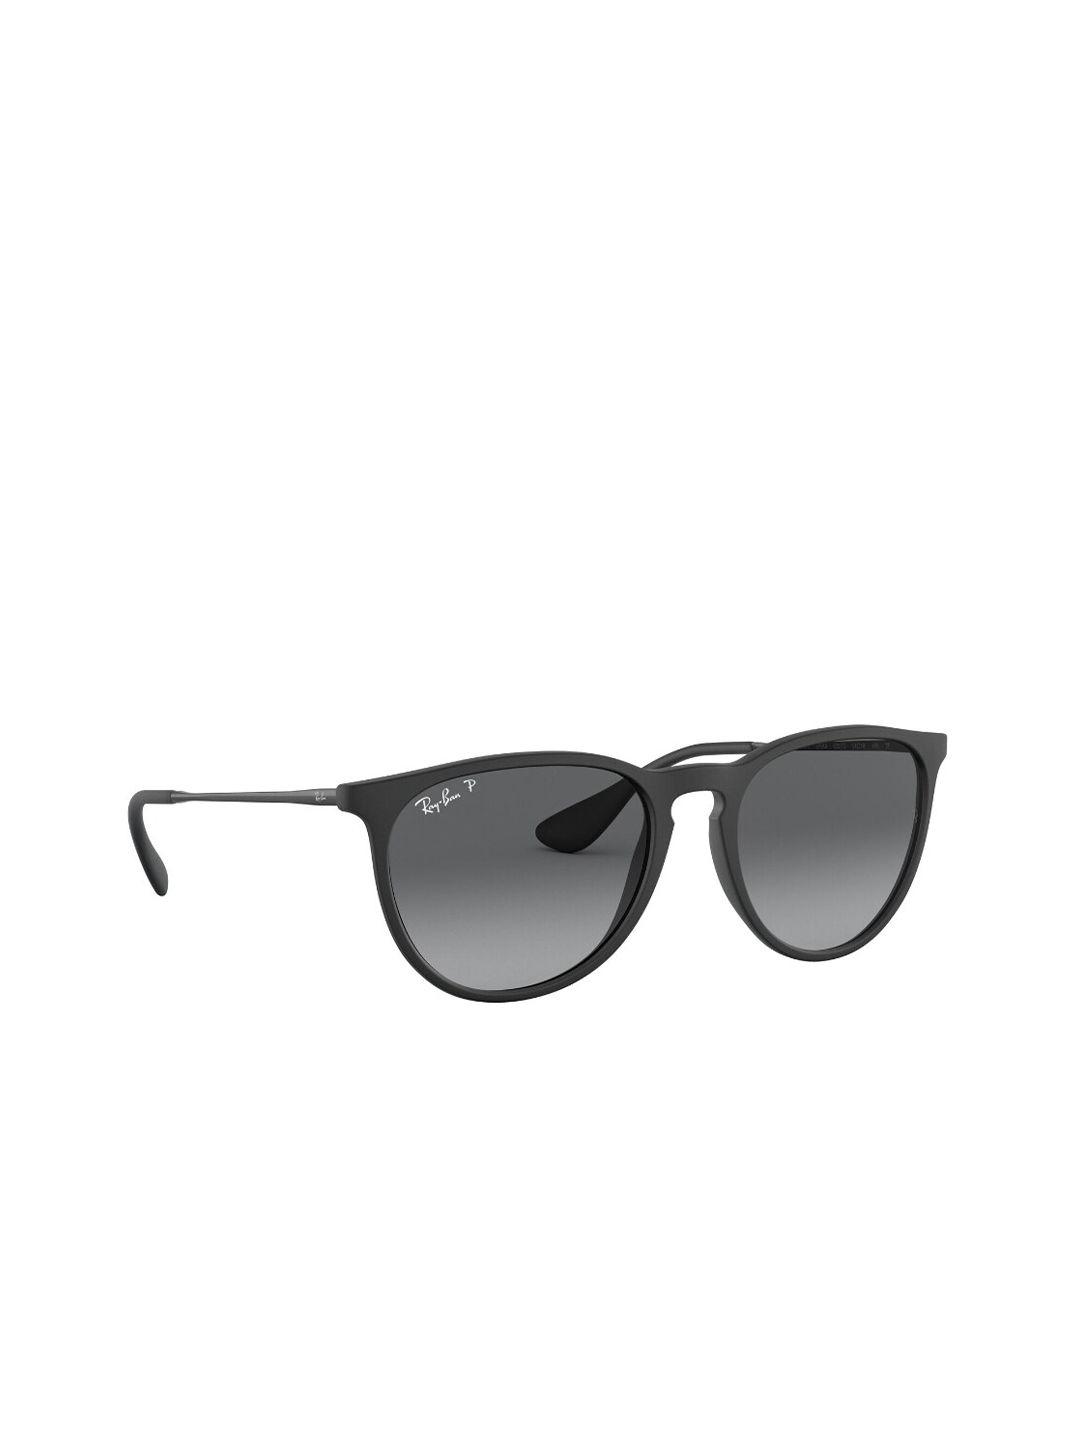 ray-ban phantos sunglasses with polarised lens 8056597142526